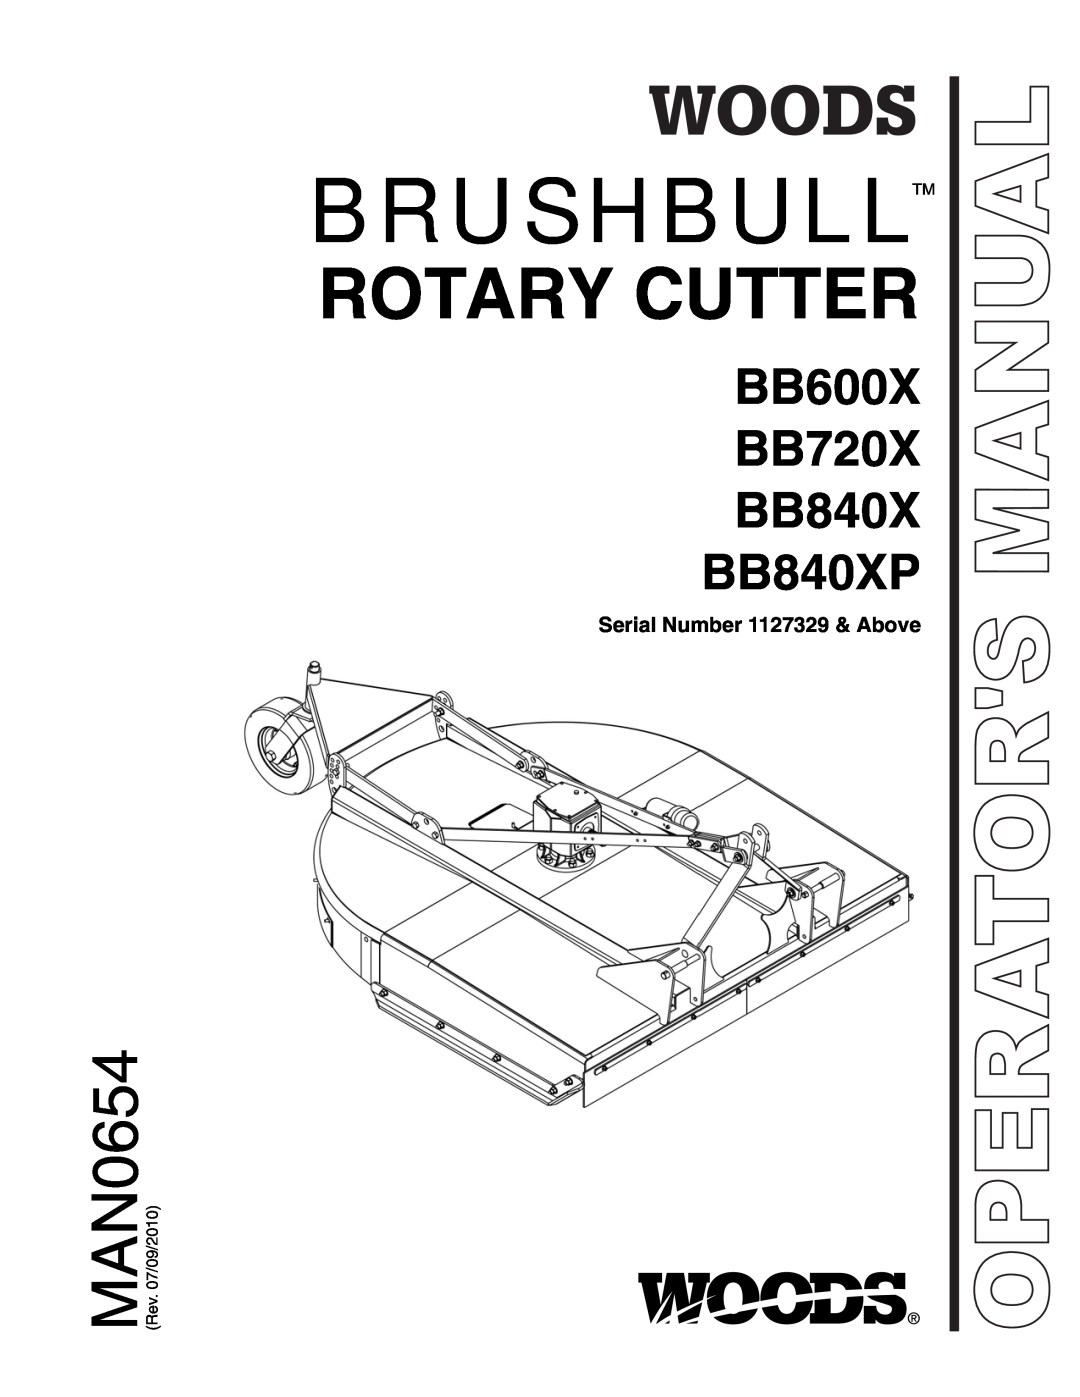 Woods Equipment manual Brushbulltm, Rotary Cutter, BB600X BB720X BB840X BB840XP, Serial Number 1127329 & Above 